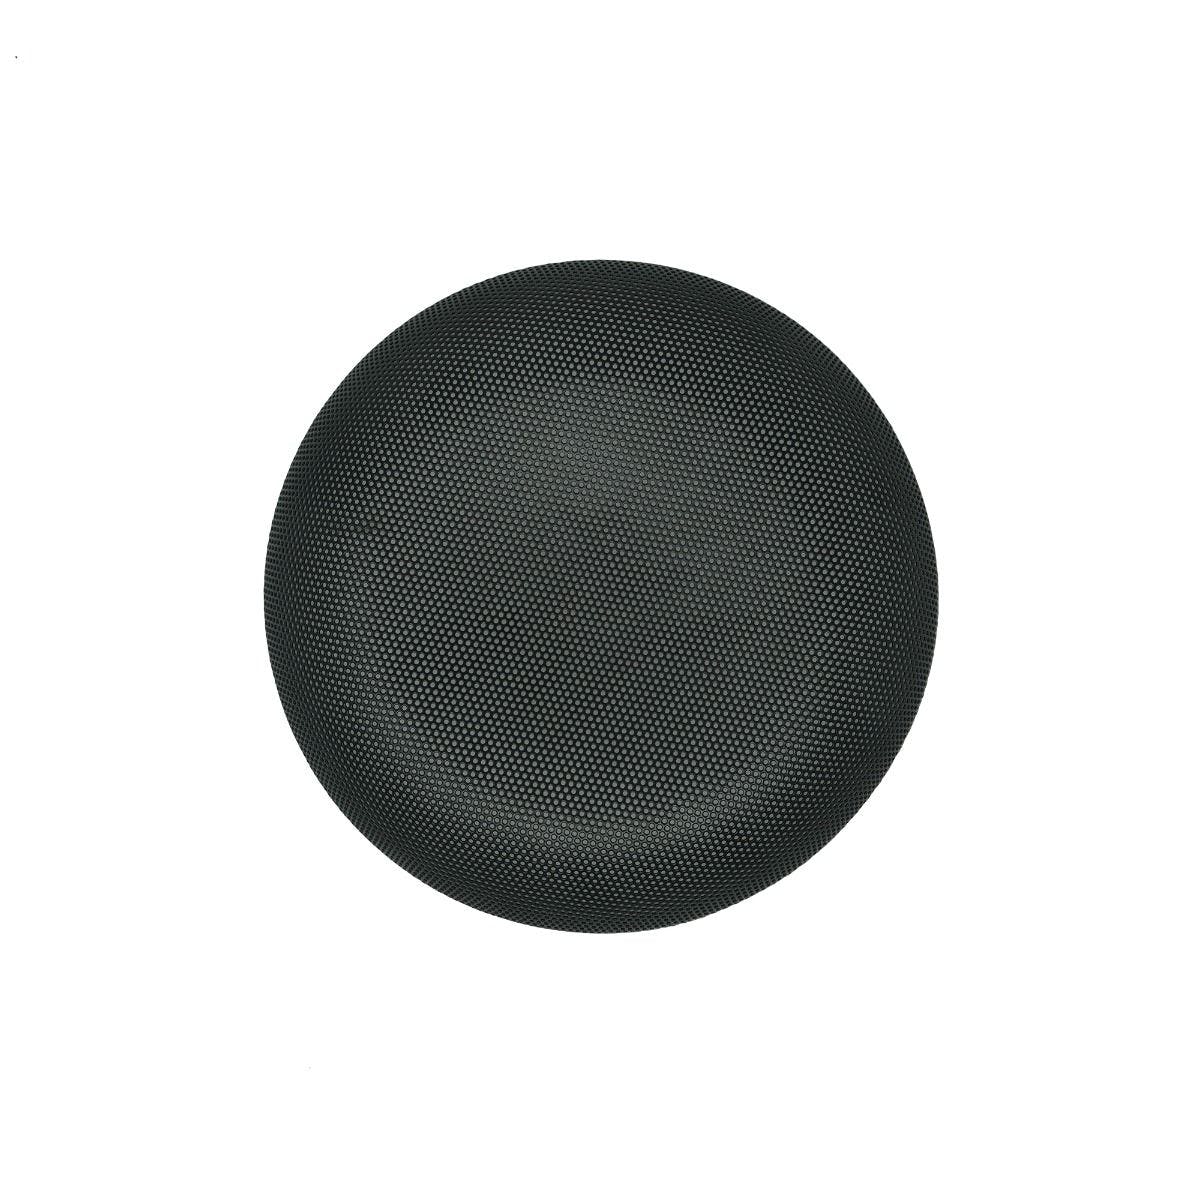 Diamond Audio DES8G 8 inch – Black Subwoofer Grill